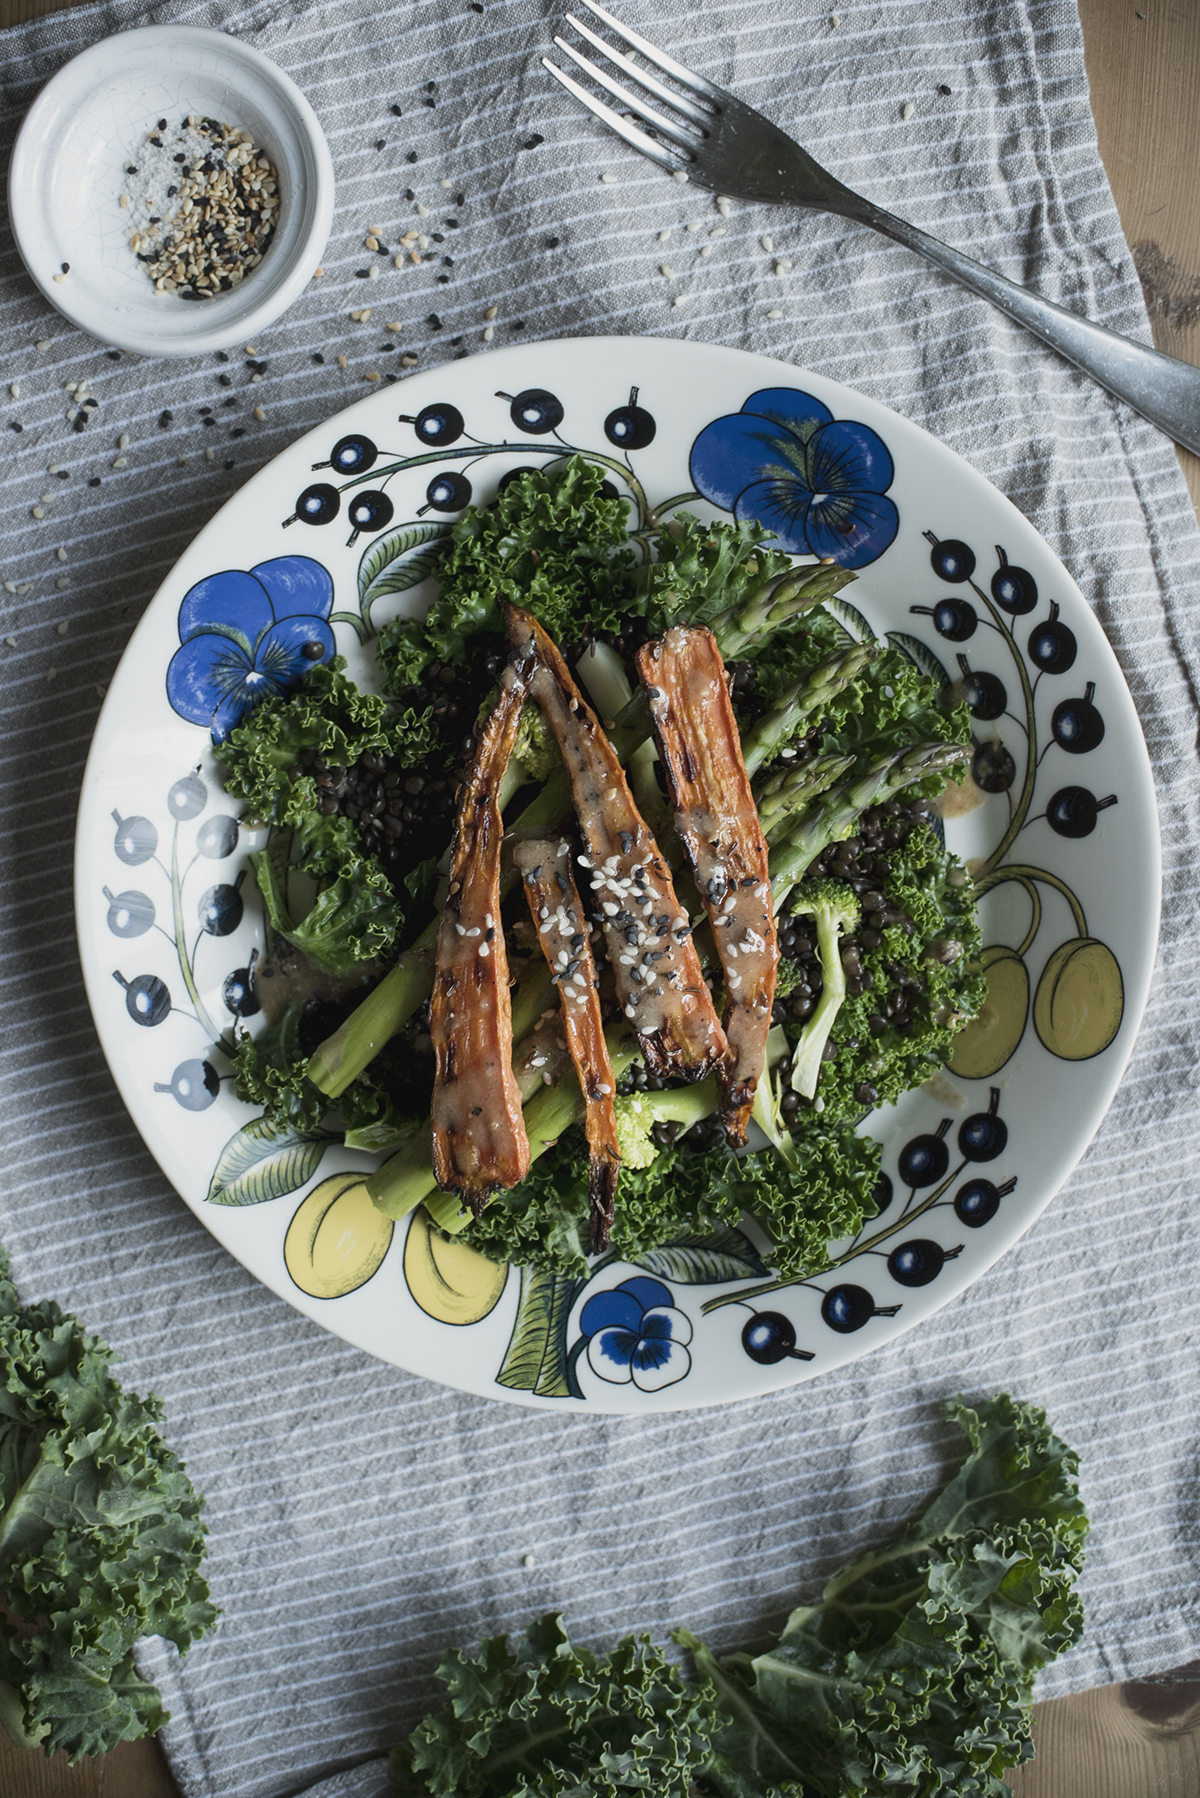 steamed kale, broccoli & asparagus with cumin roasted carrots